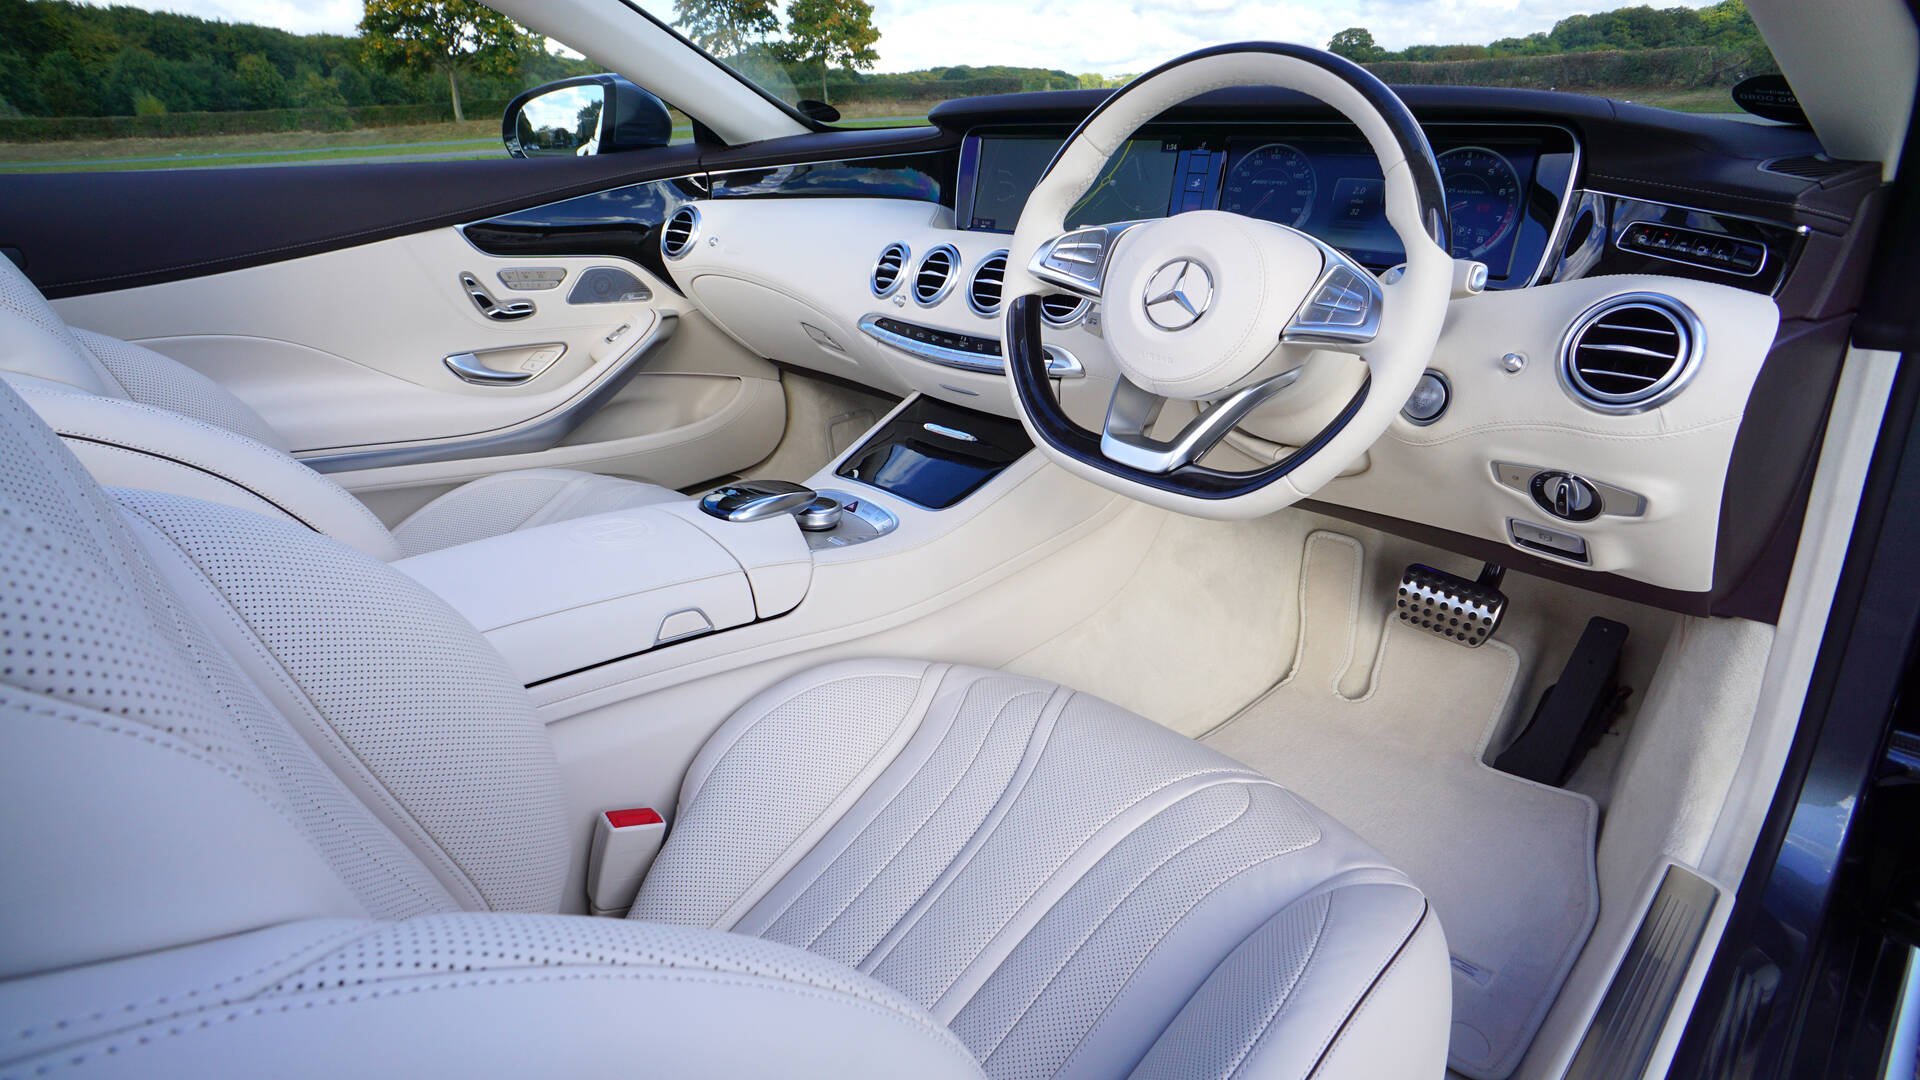 Interior of a Mercedes luxury car